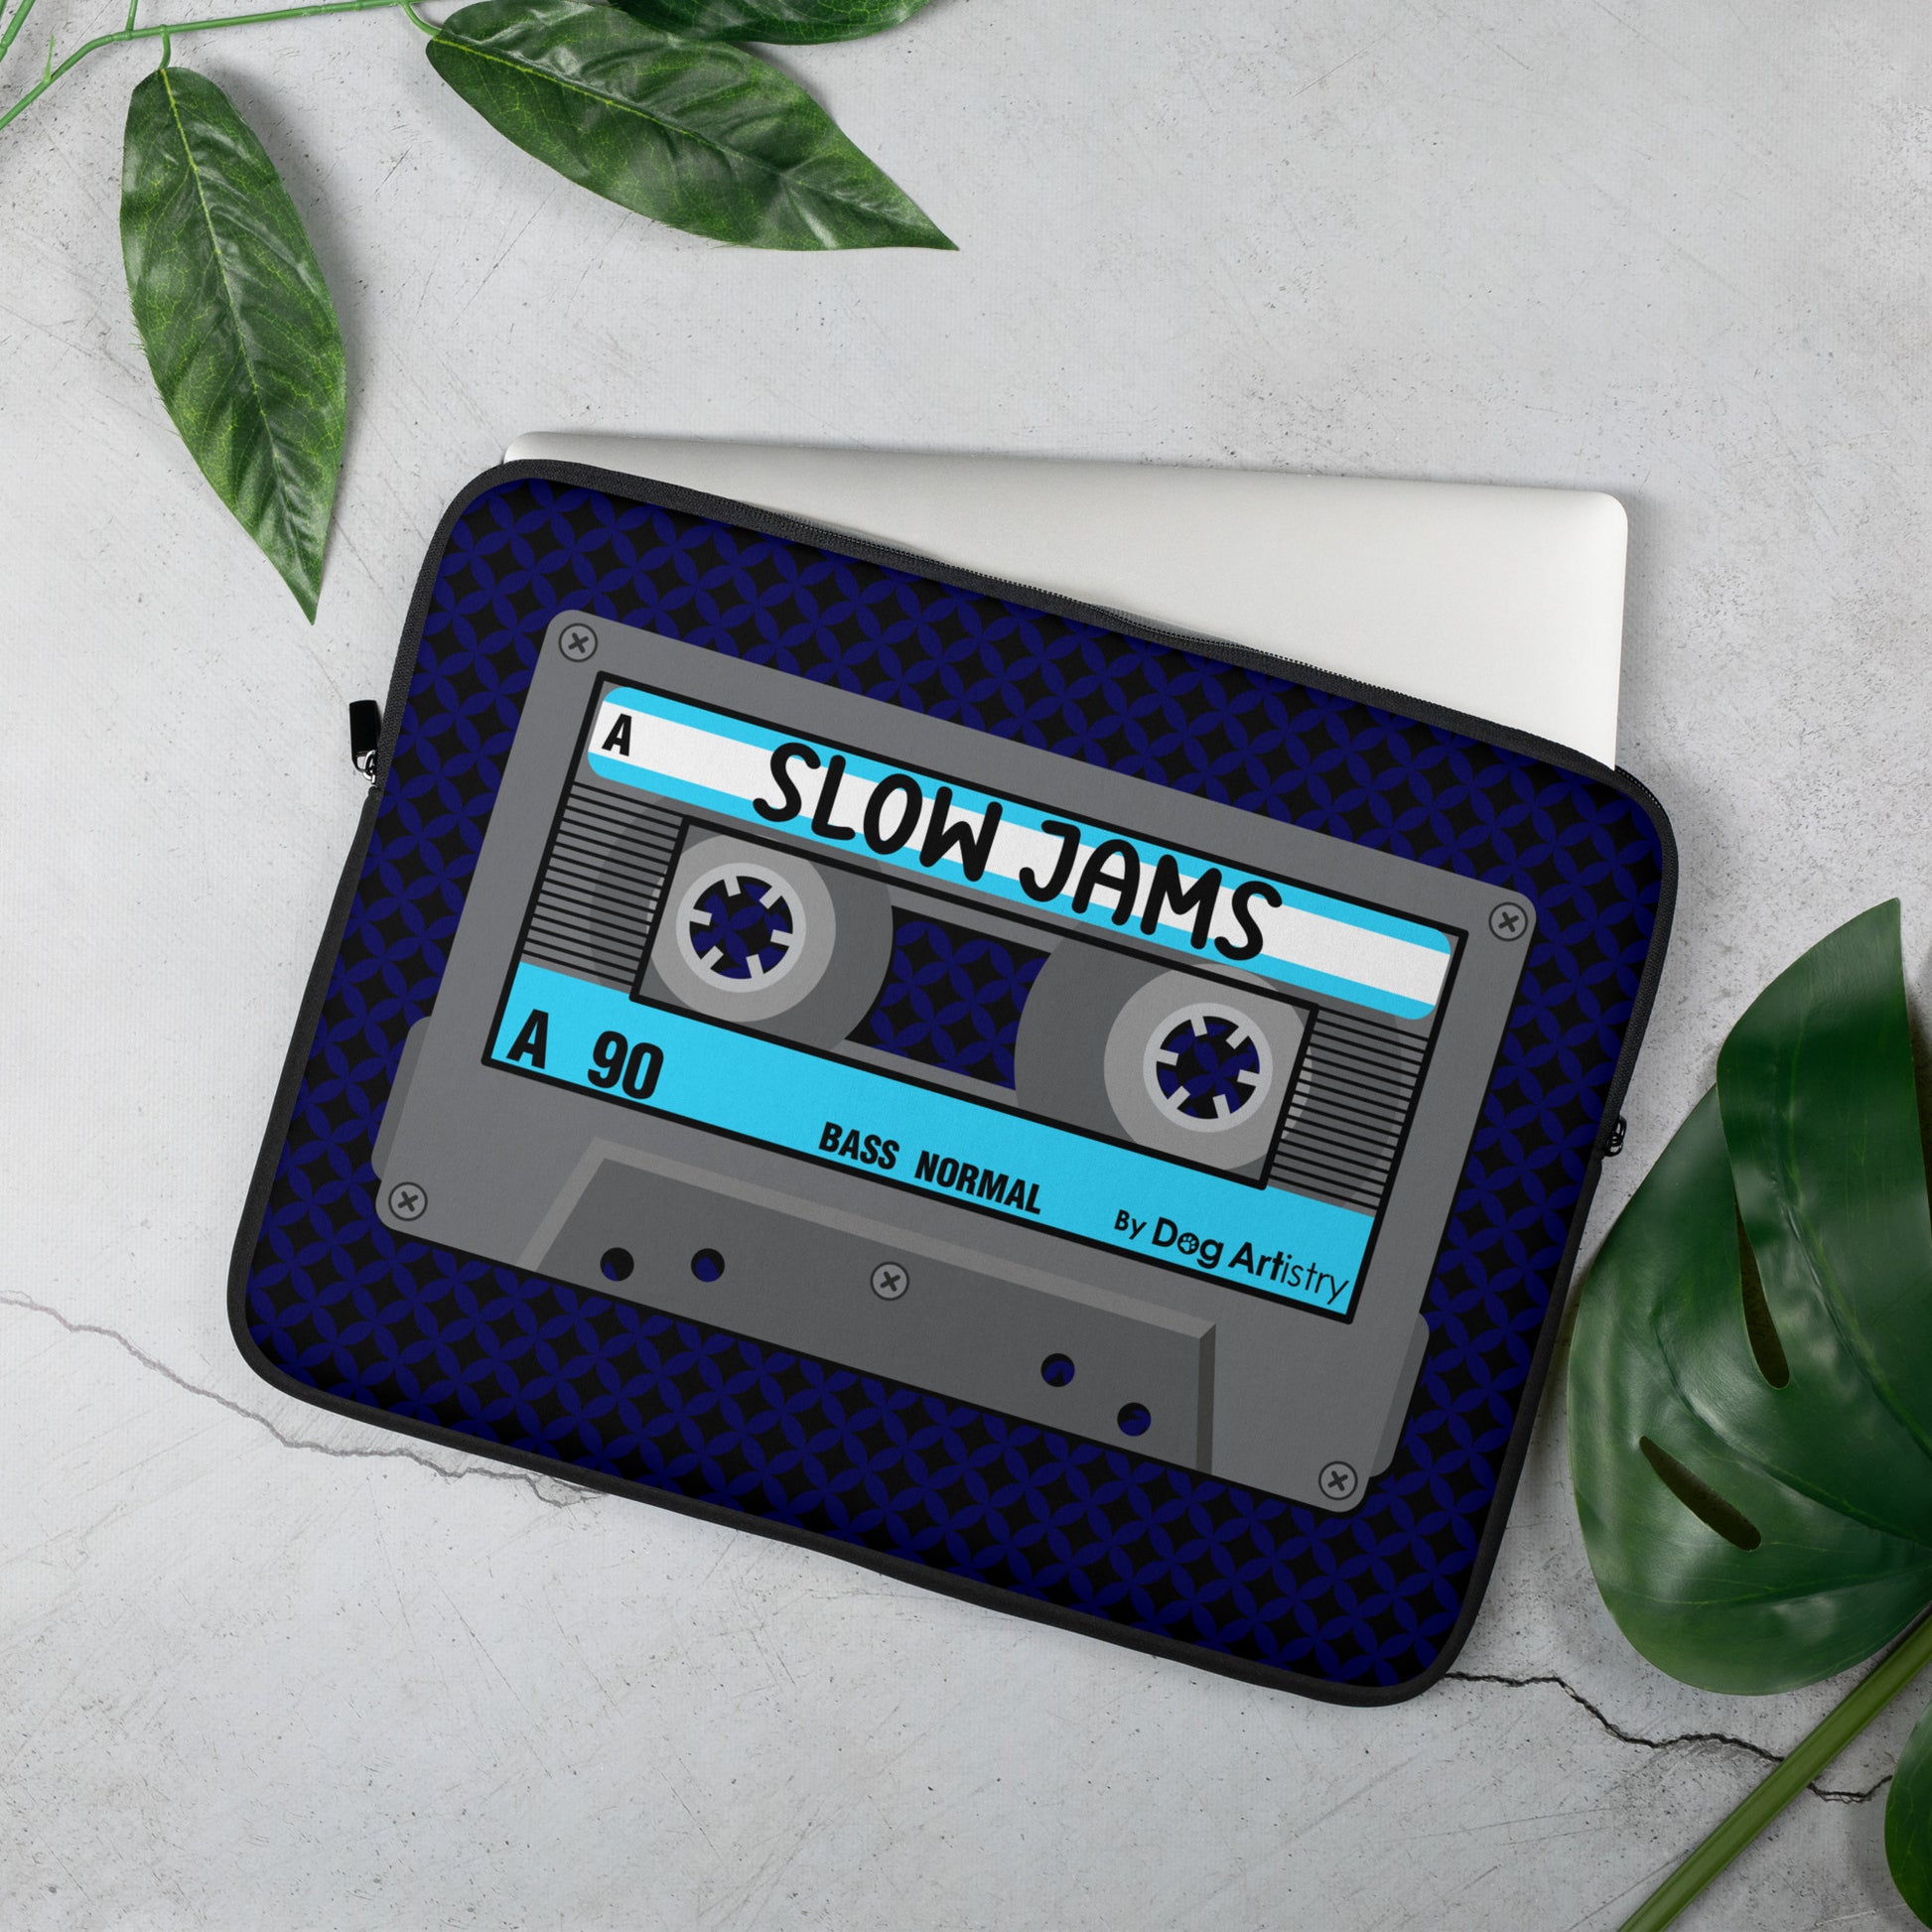 Cassette Tape Slow Jams music laptop sleeve designed by Dog Artistry.